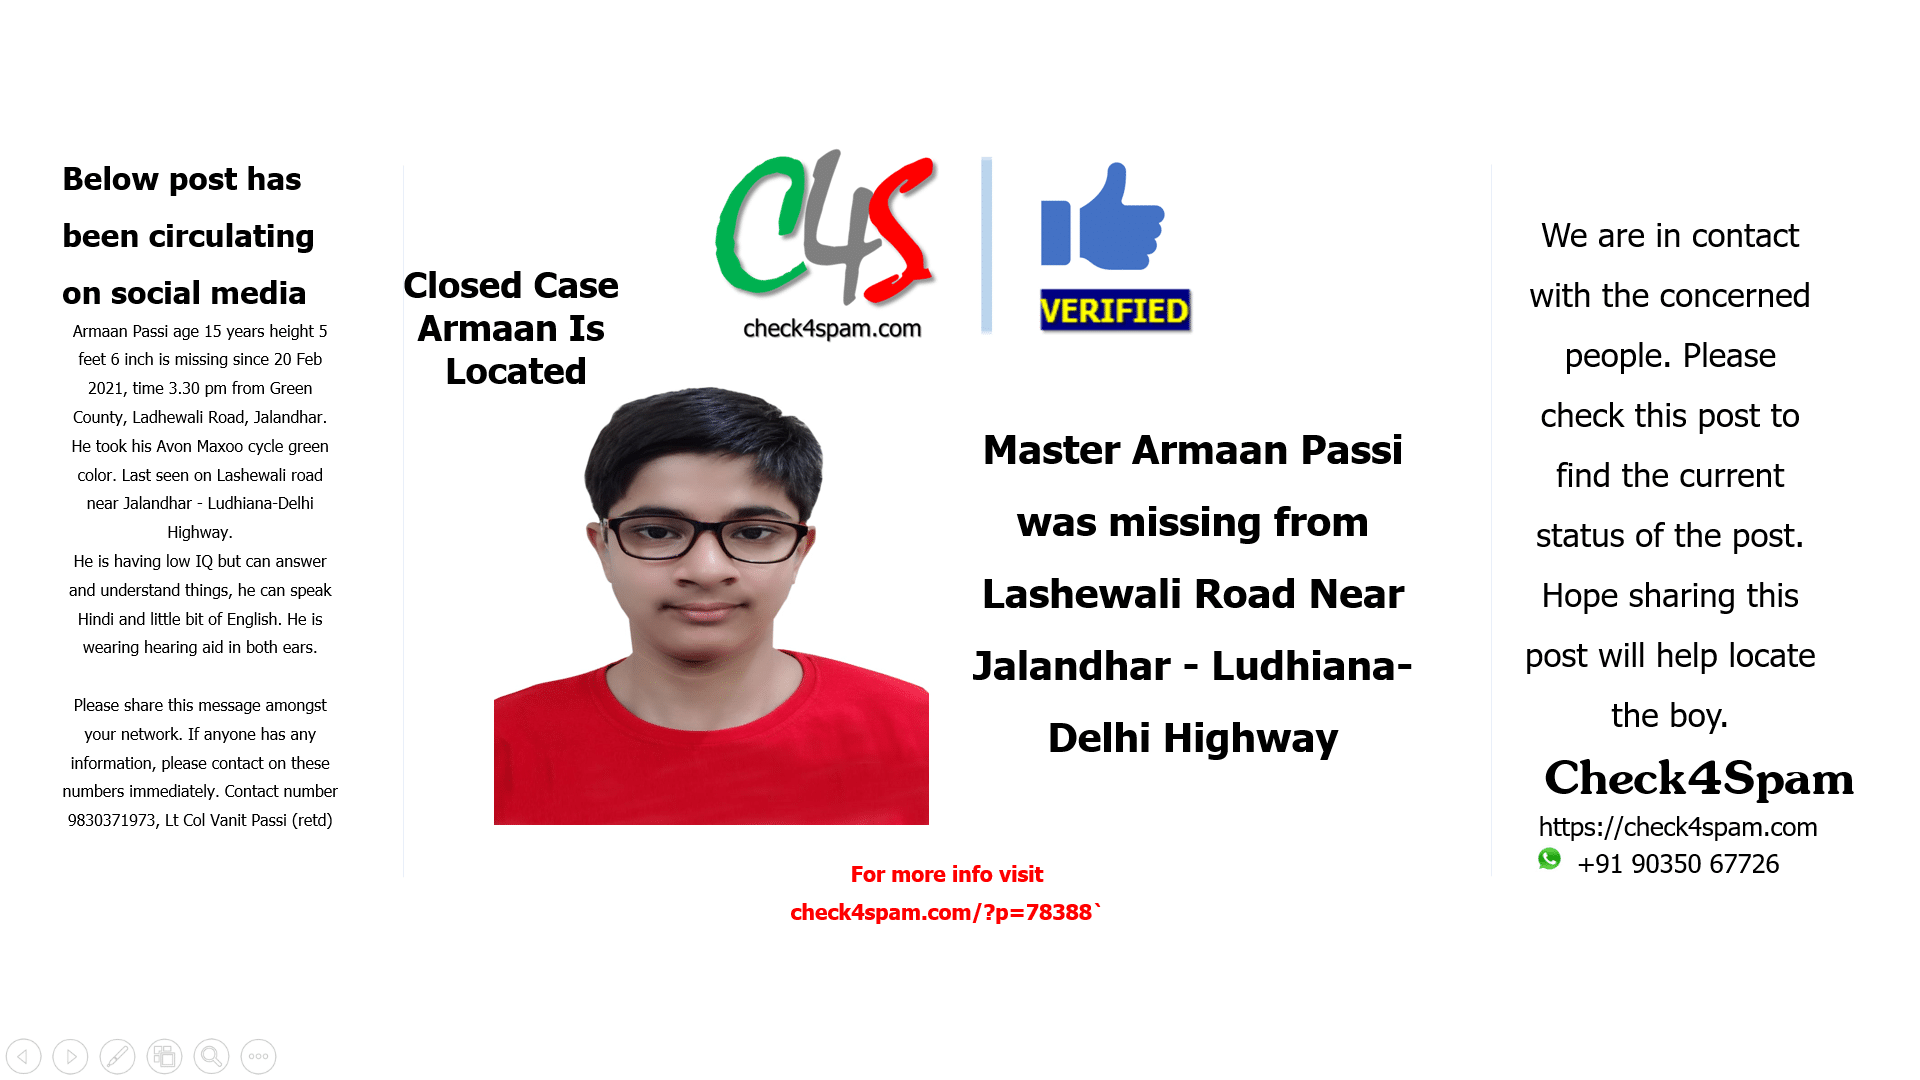 Missing Boy, From Lashewali Road Near Jalandhar